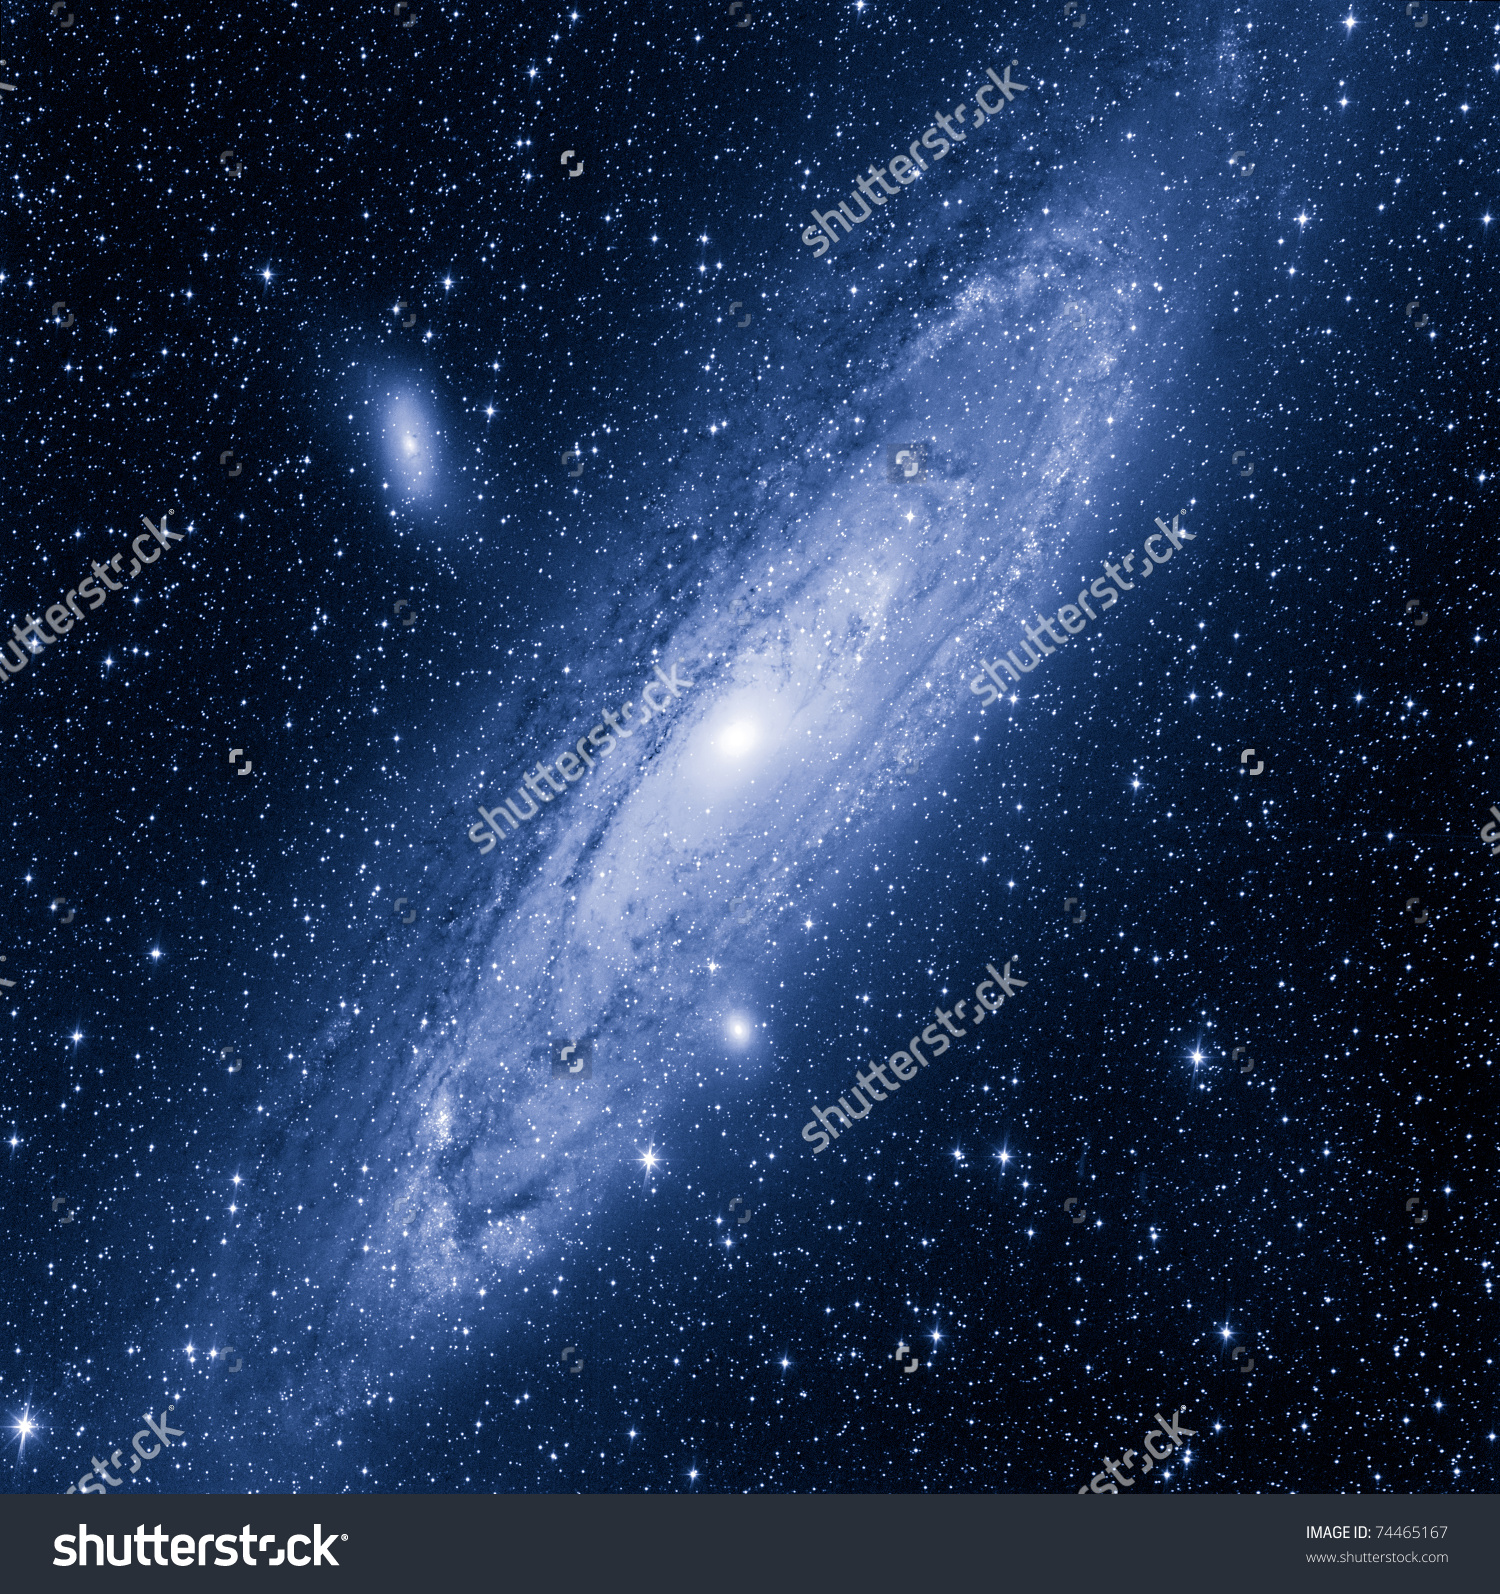 Great Andromeda Galaxy Stock Photo 74465167 : Shutterstock.